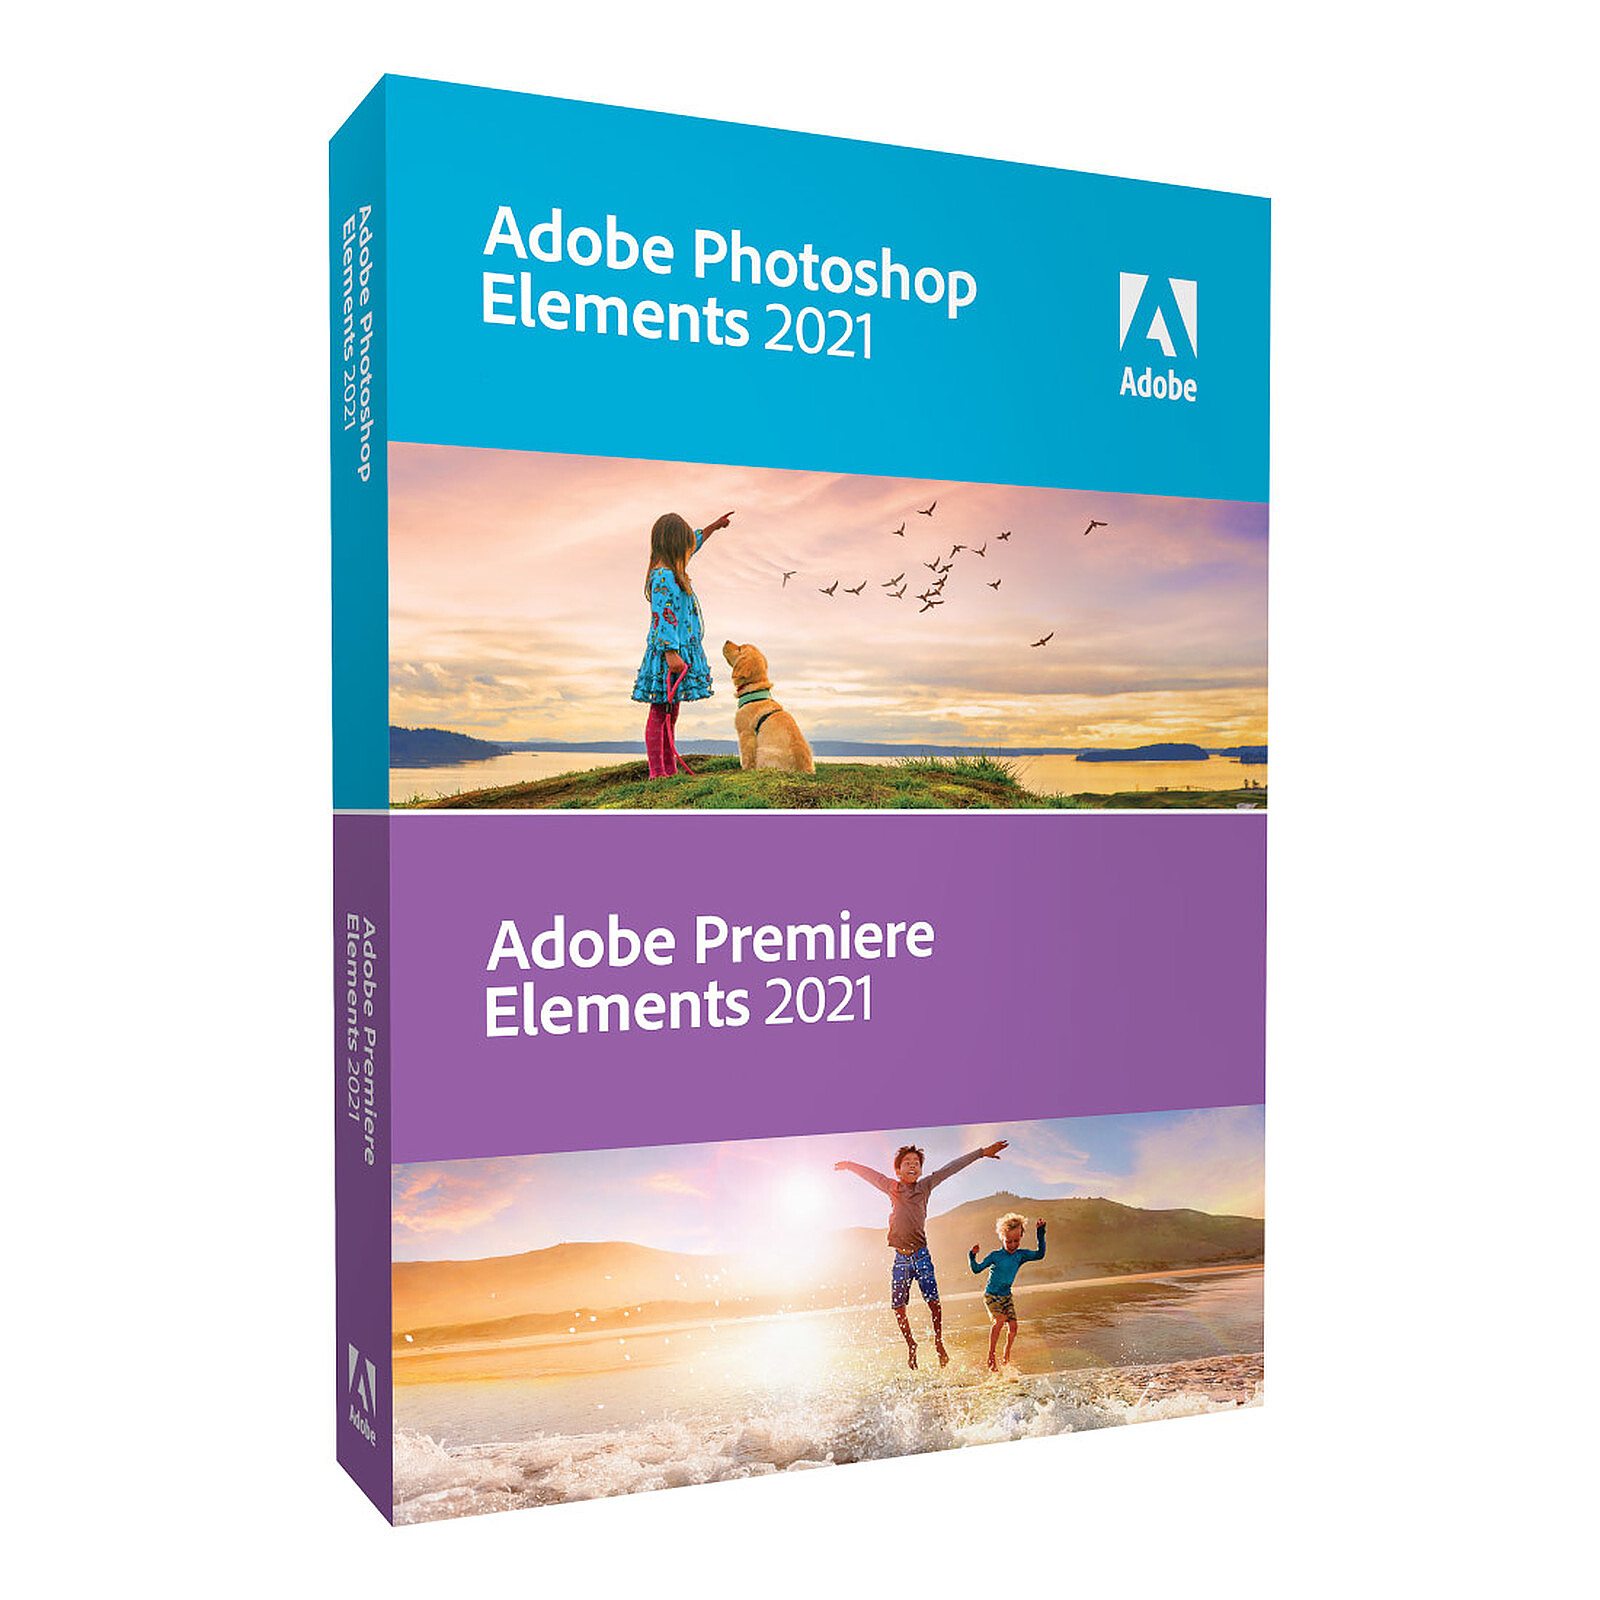 Adobe Photoshop Elements & Premiere Elements 2021 - Perpetual